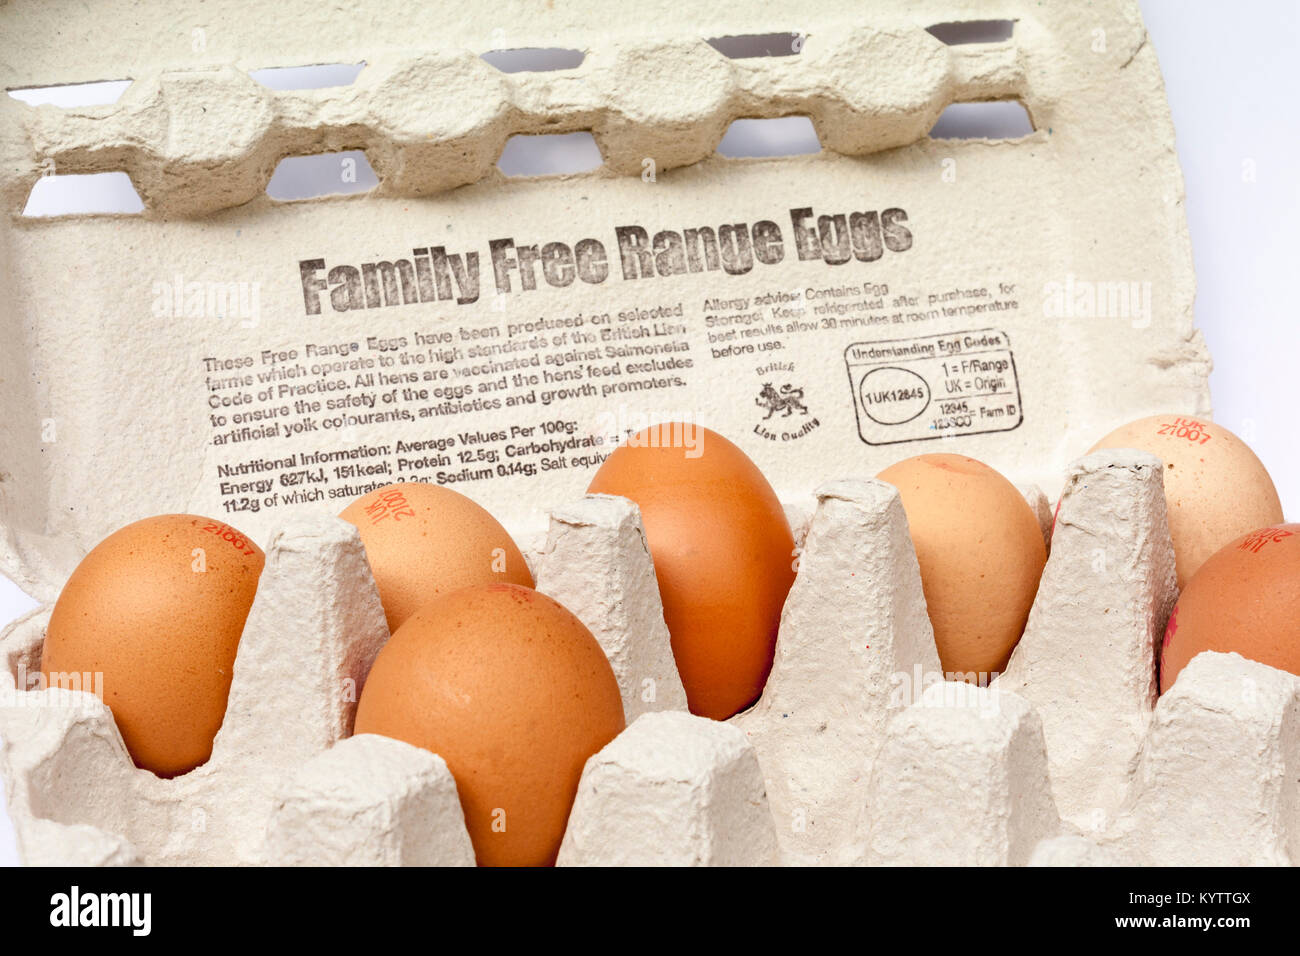 Carton of free range eggs Stock Photo